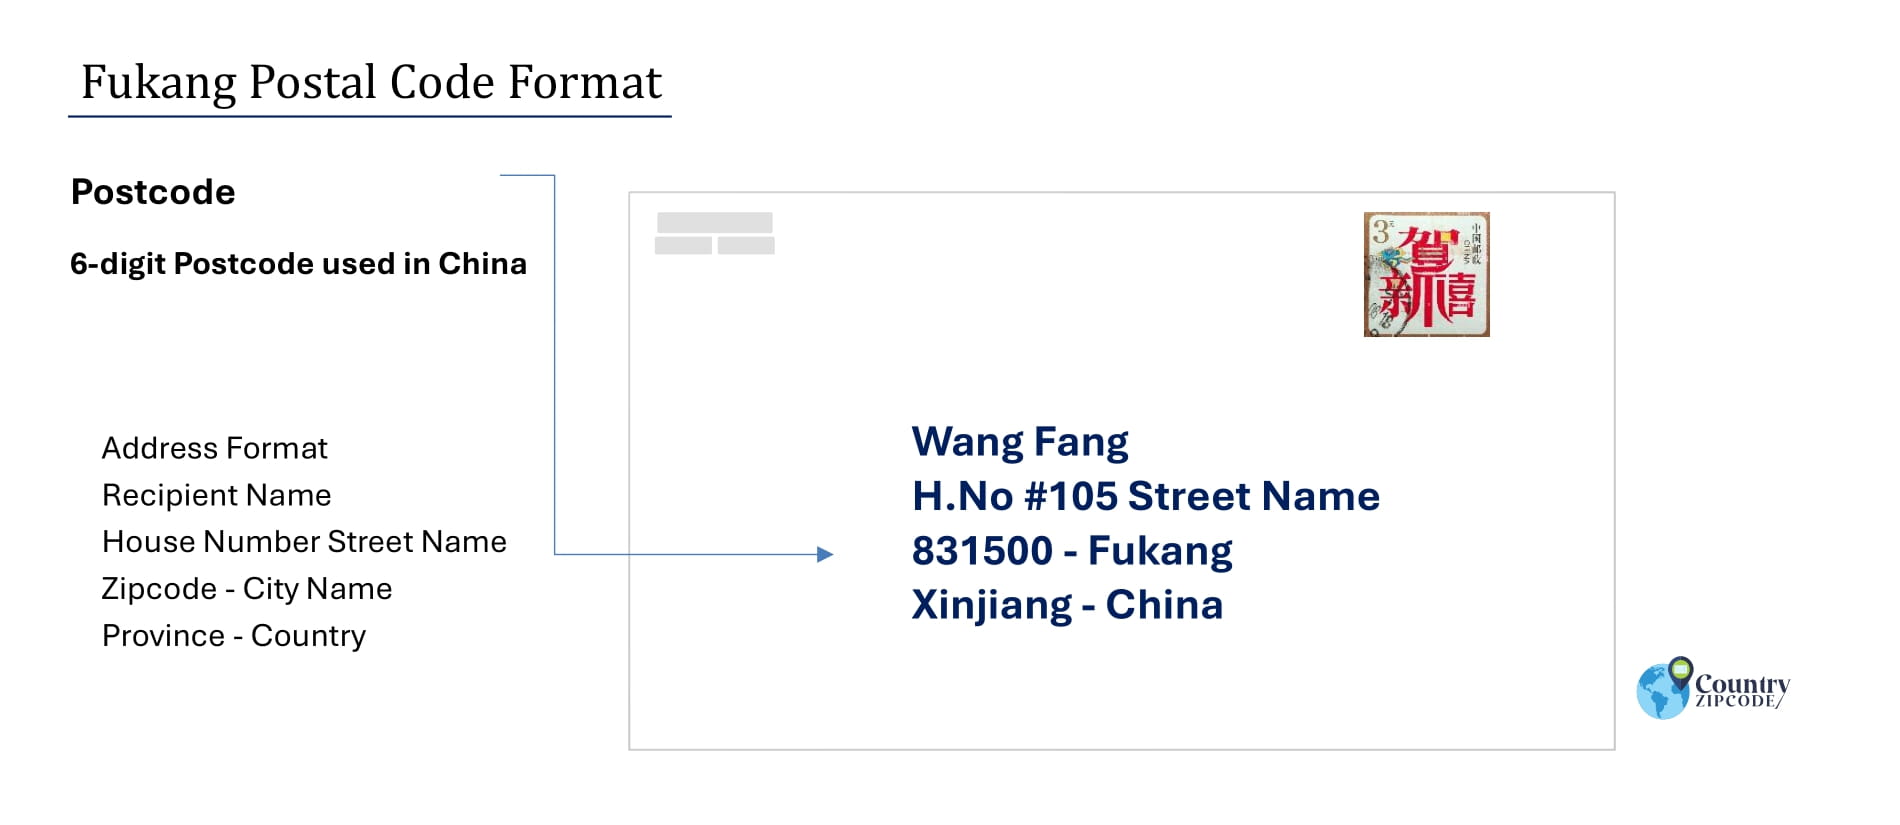 Example of FukangChinaPostalcodeandAddressformat